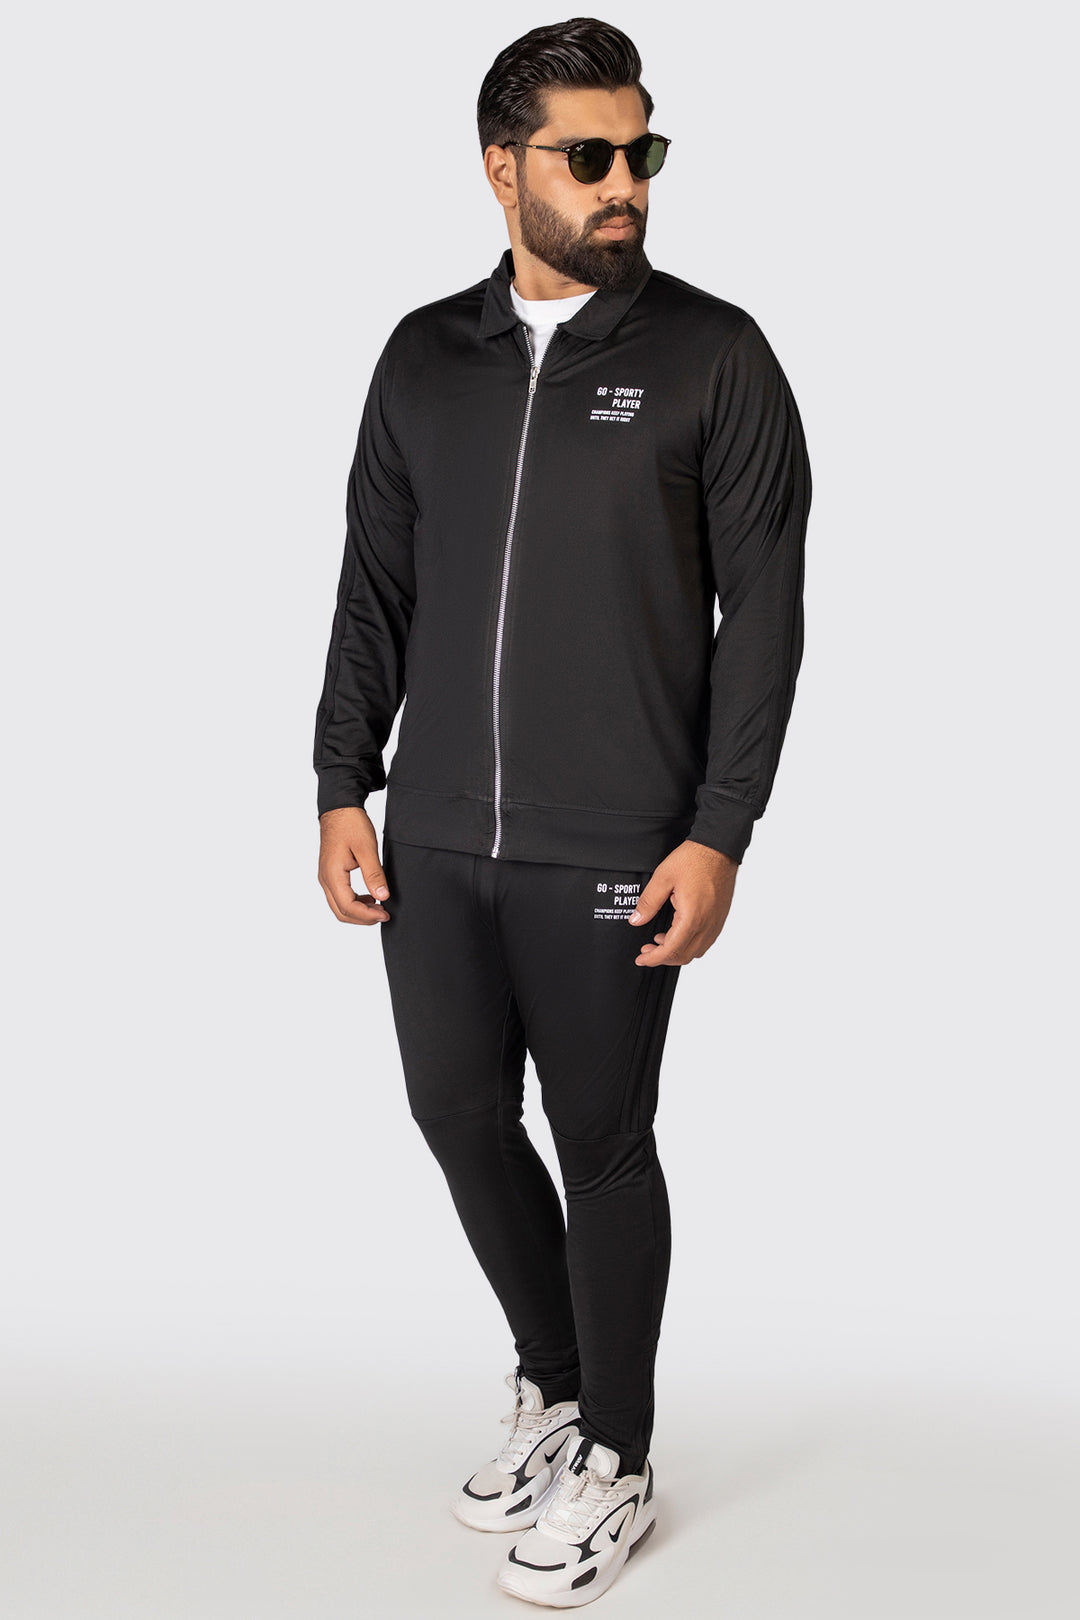 Go-Sporty Black Polyester Zipper Jacket (Plus Size) - W23 - MJ0014P